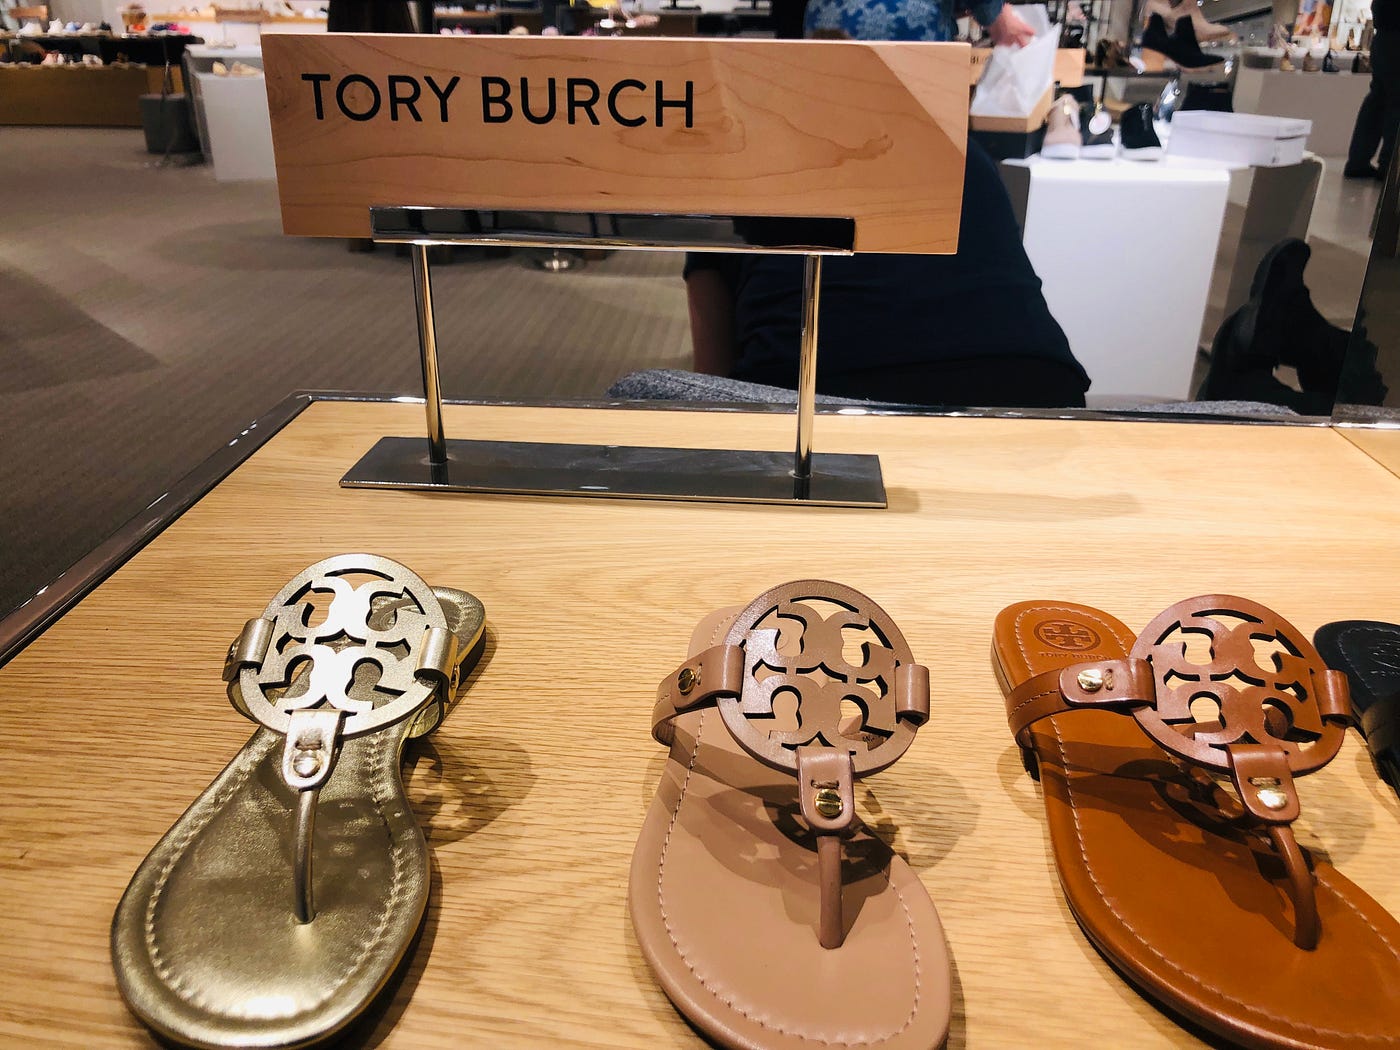 Tory Burch Sandals Are Worth the Price, by Kimberly Carlson Aesara, ILLUMINATION